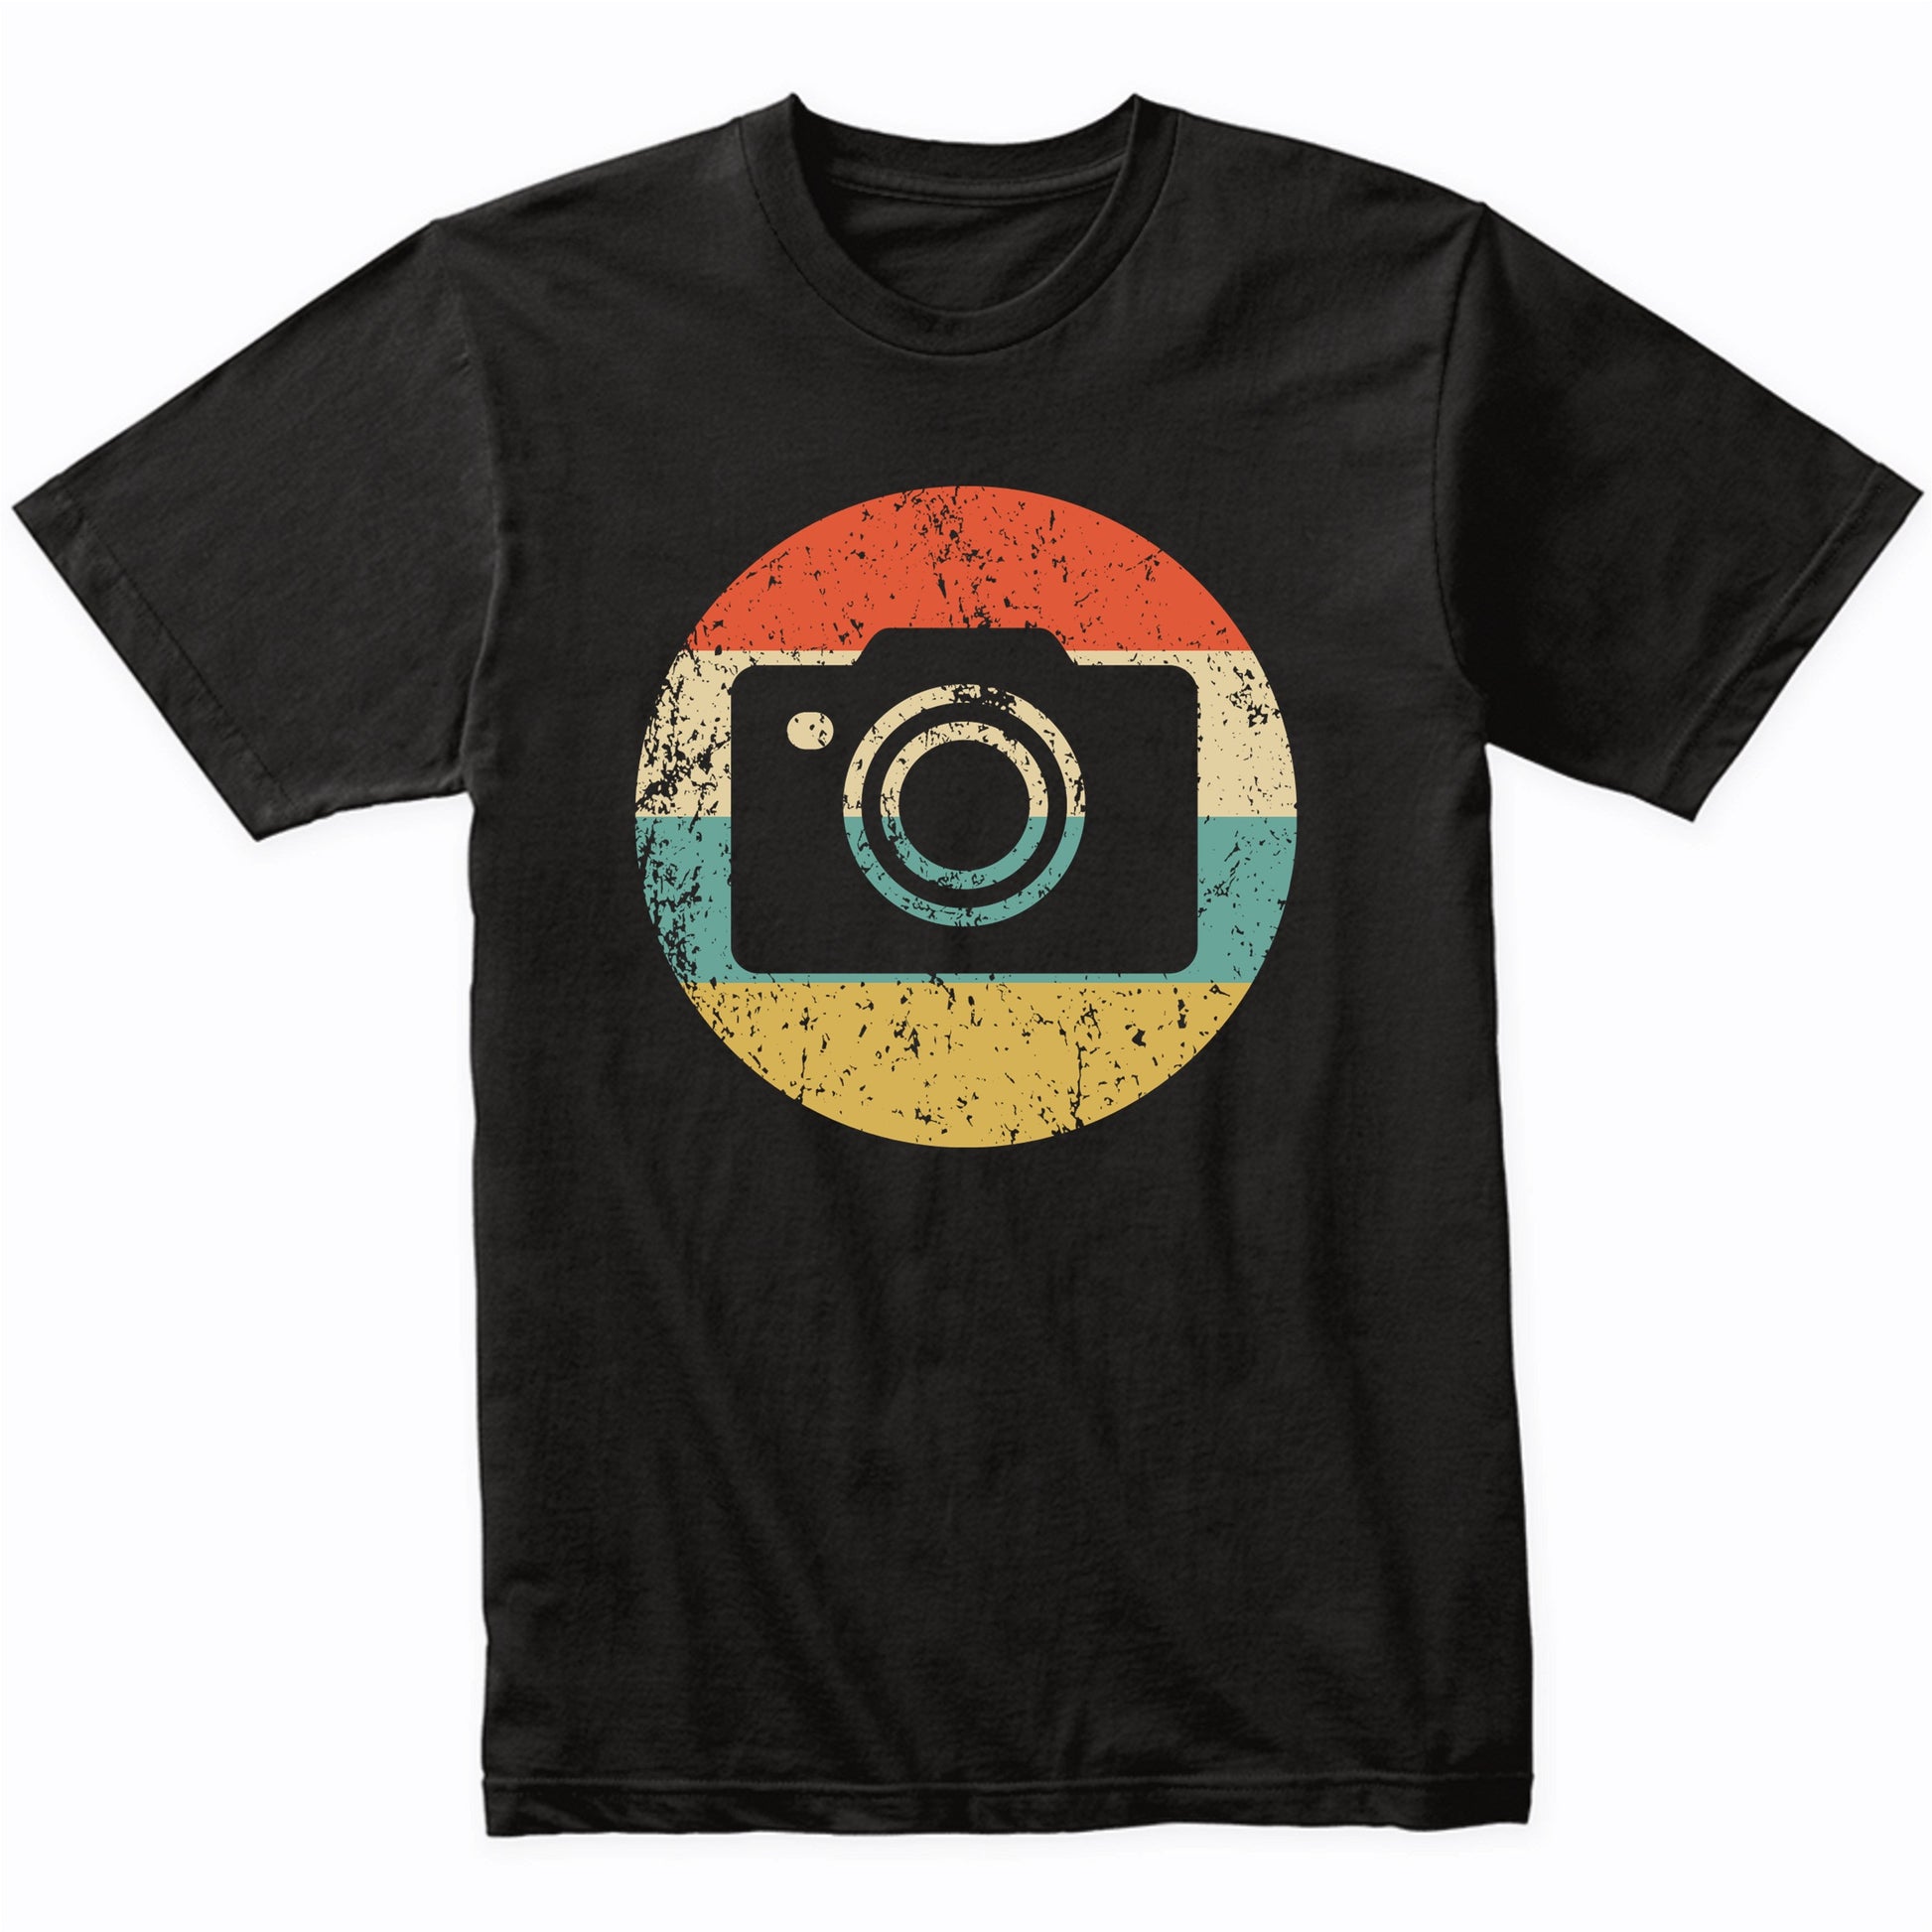 Photographer Shirt - Vintage Retro Camera T-Shirt